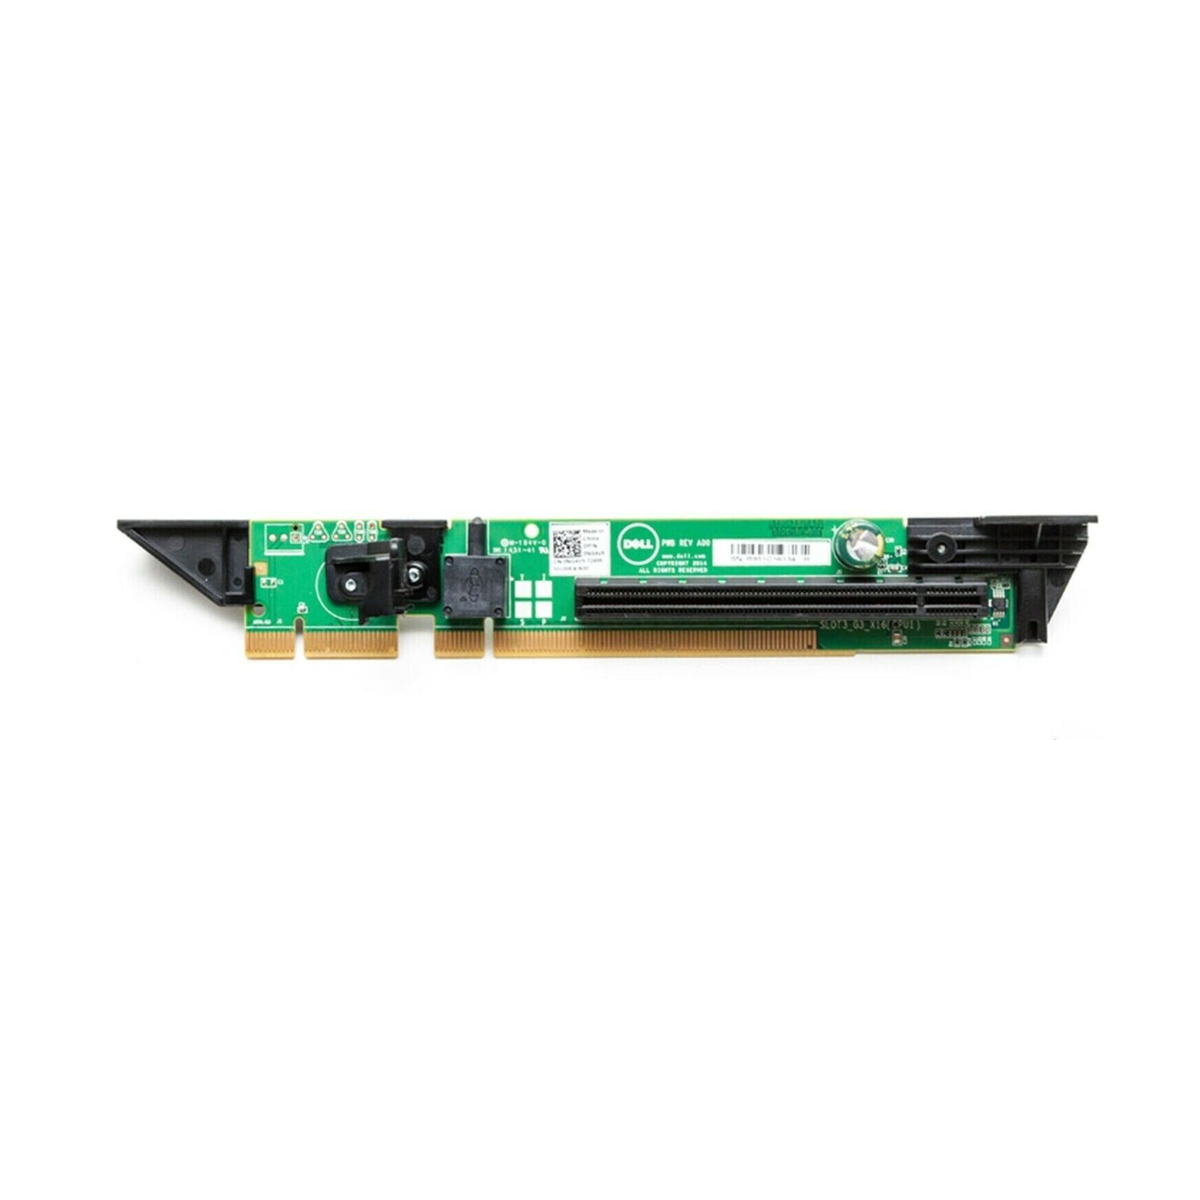 RISER BOARD DELL PE R630 PCIe 3.0x16 0NG4V5